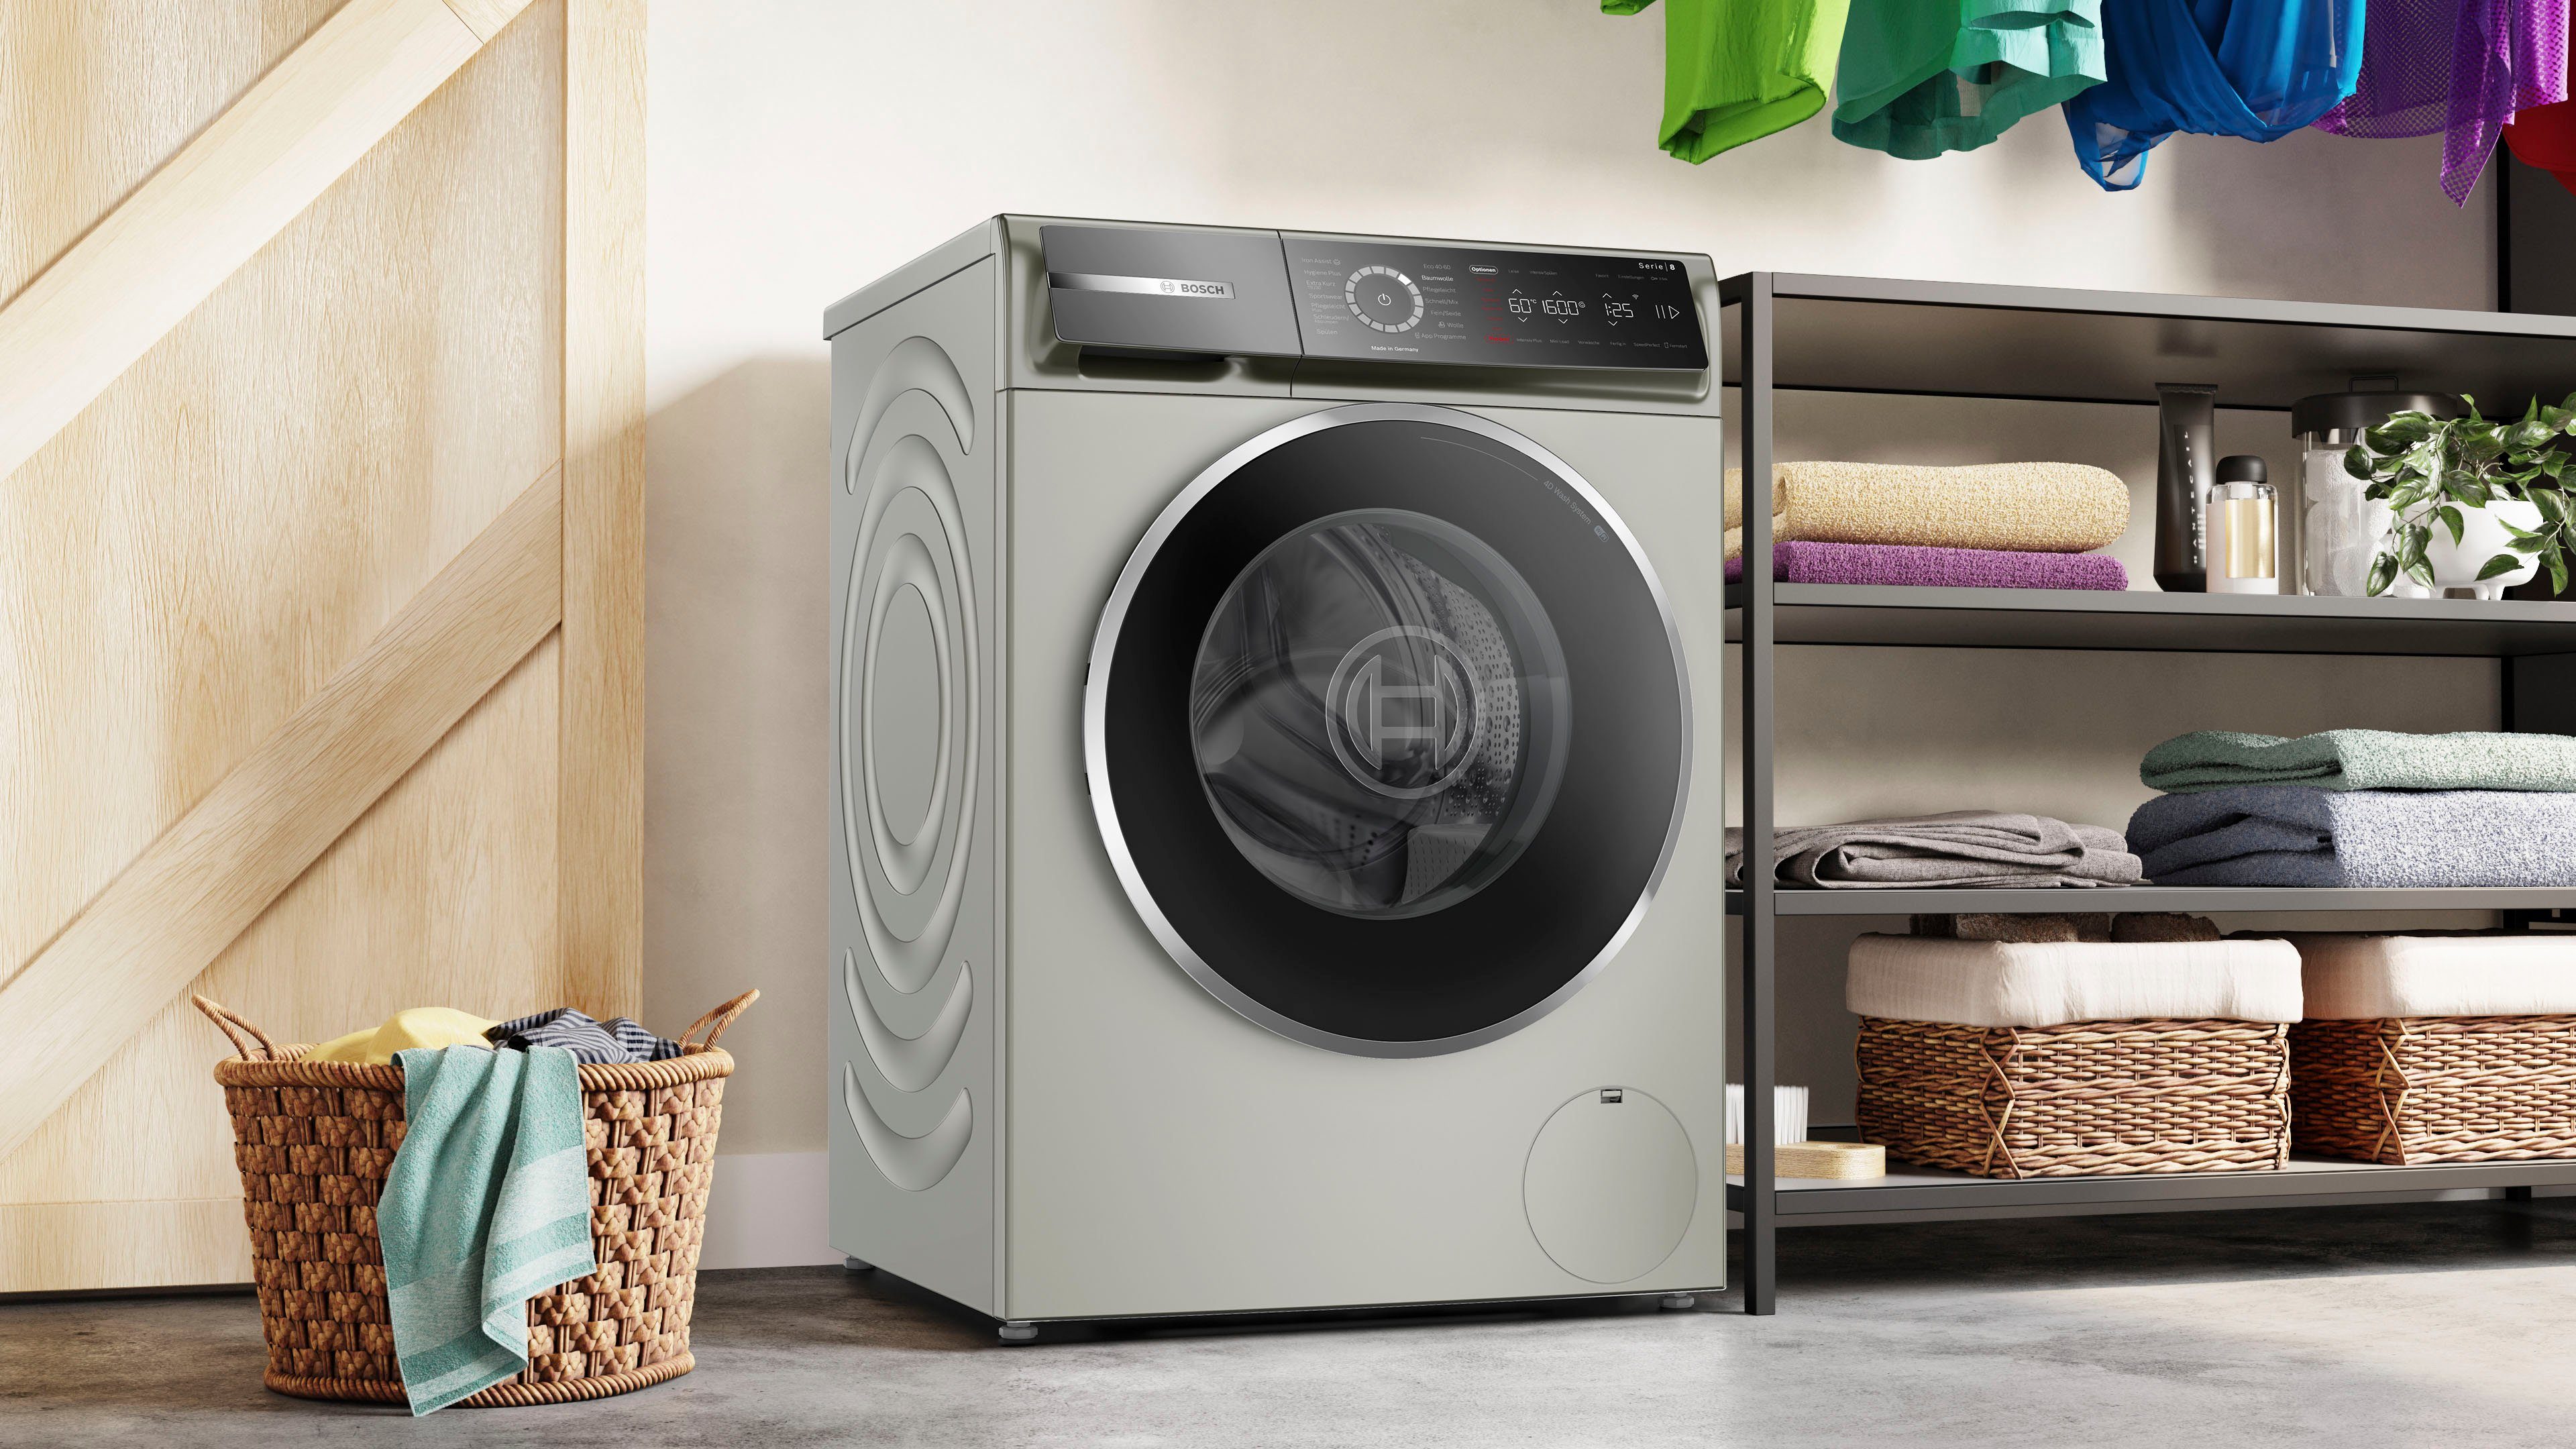 BOSCH Waschmaschine WGB2560X0, 1600 Dampf Iron dank reduziert 10 Assist 8 Serie kg, % 50 Falten der U/min